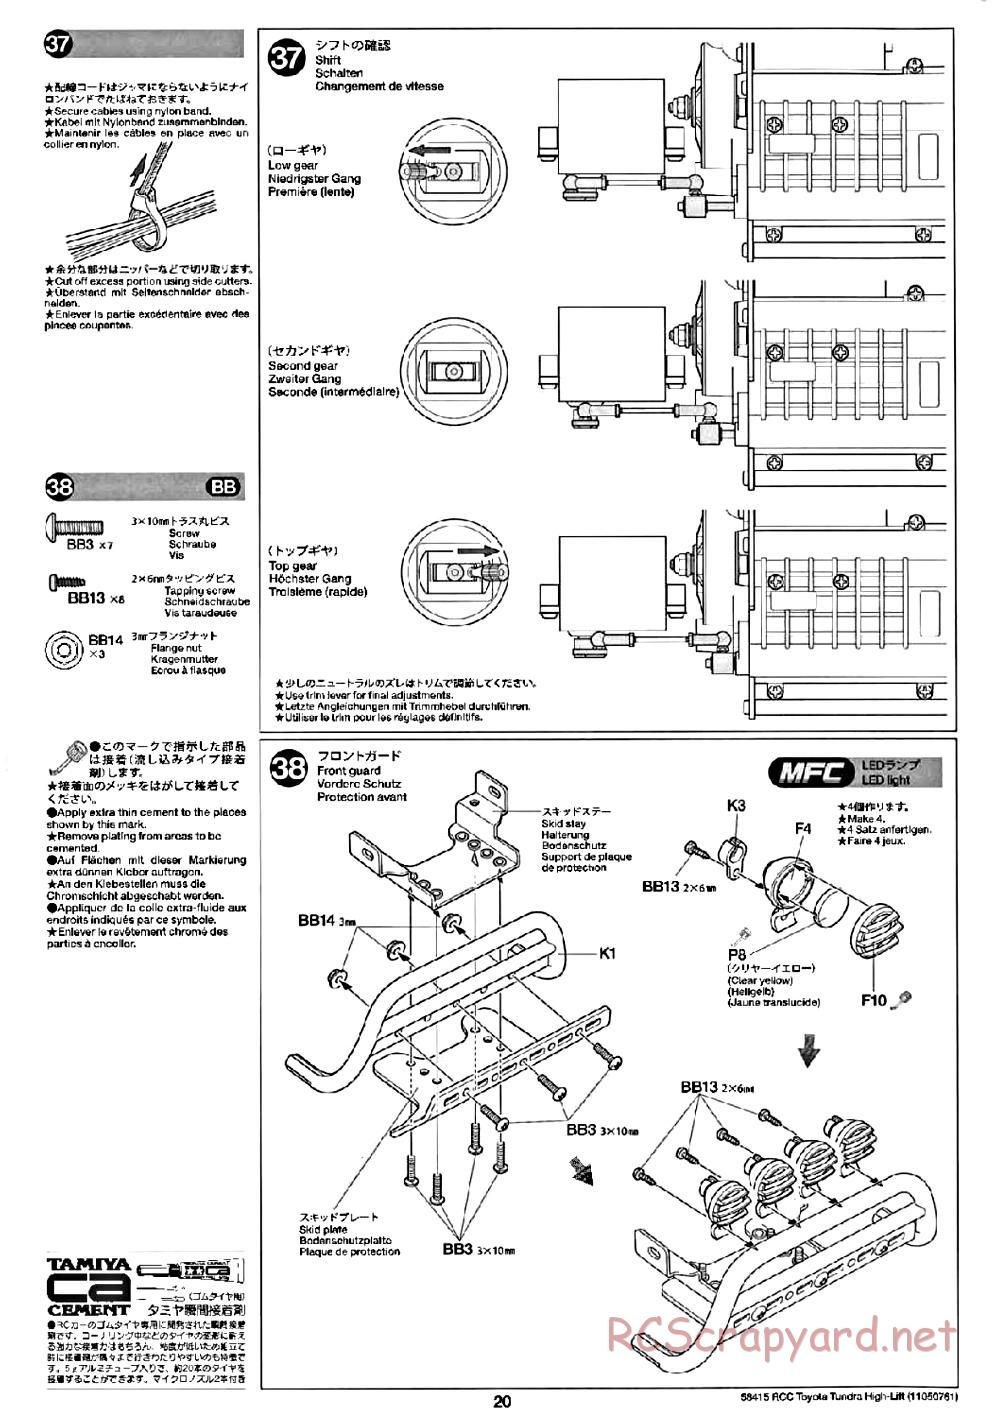 Tamiya - Toyota Tundra High-Lift Chassis - Manual - Page 20